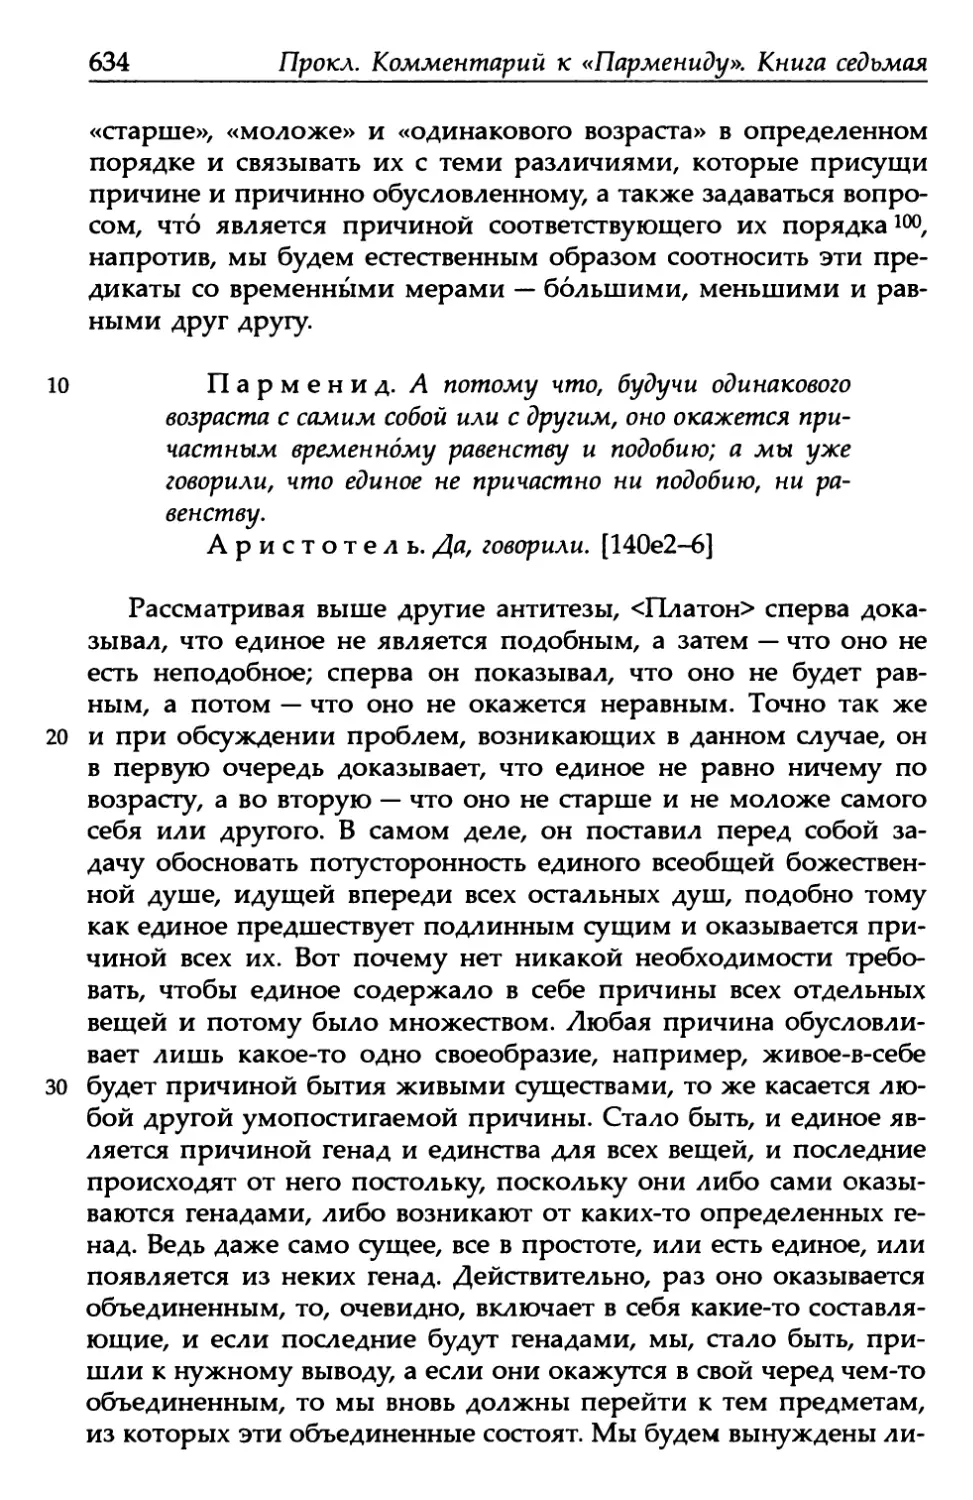 «Парменид», 140е2-6